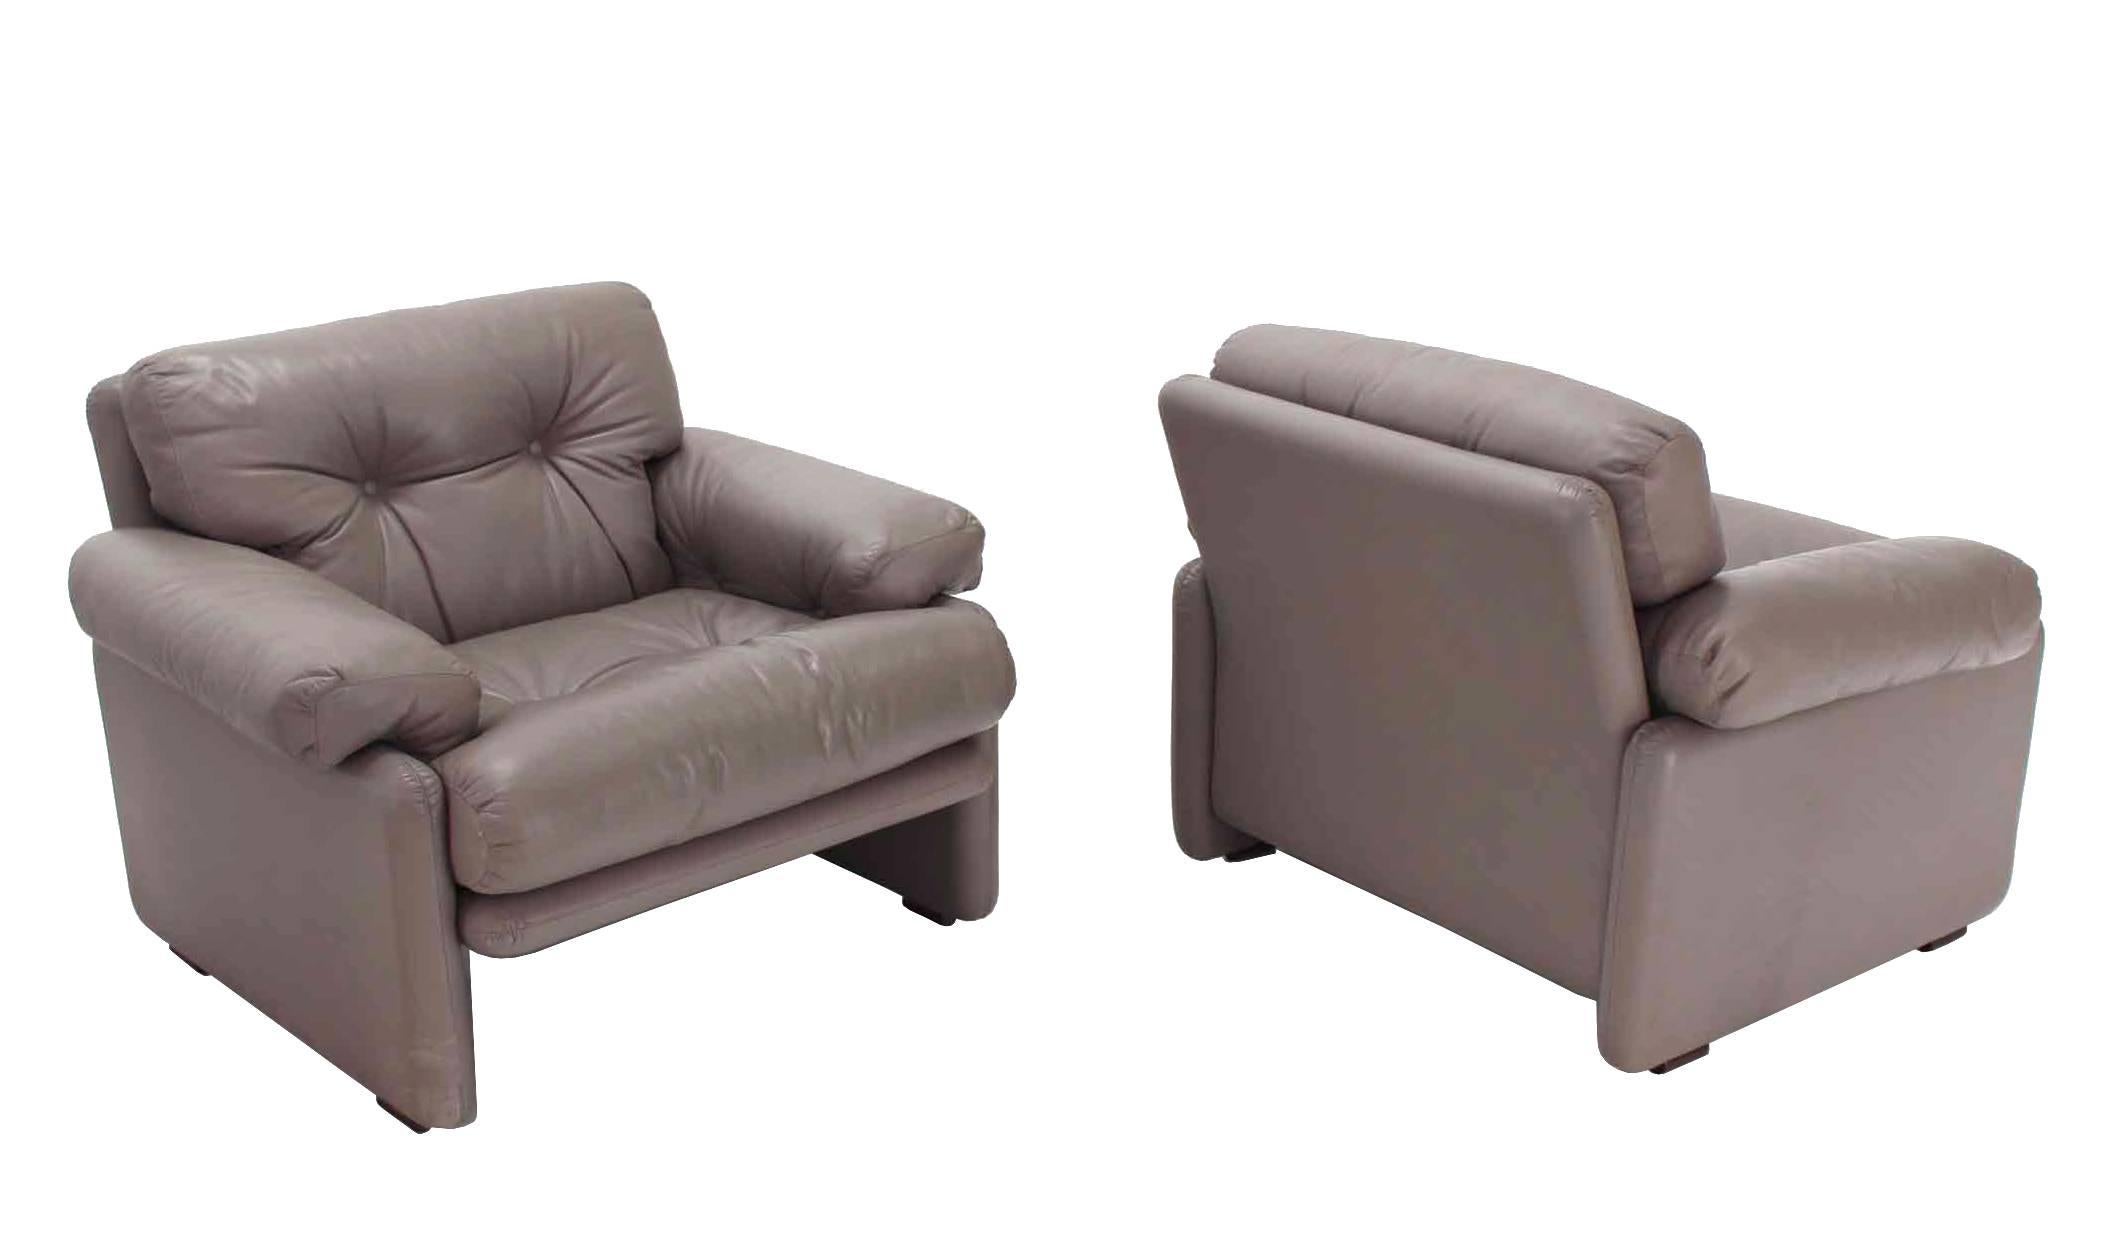 Nice warm grey leather upholstery lounge chairs by B&B Italia.